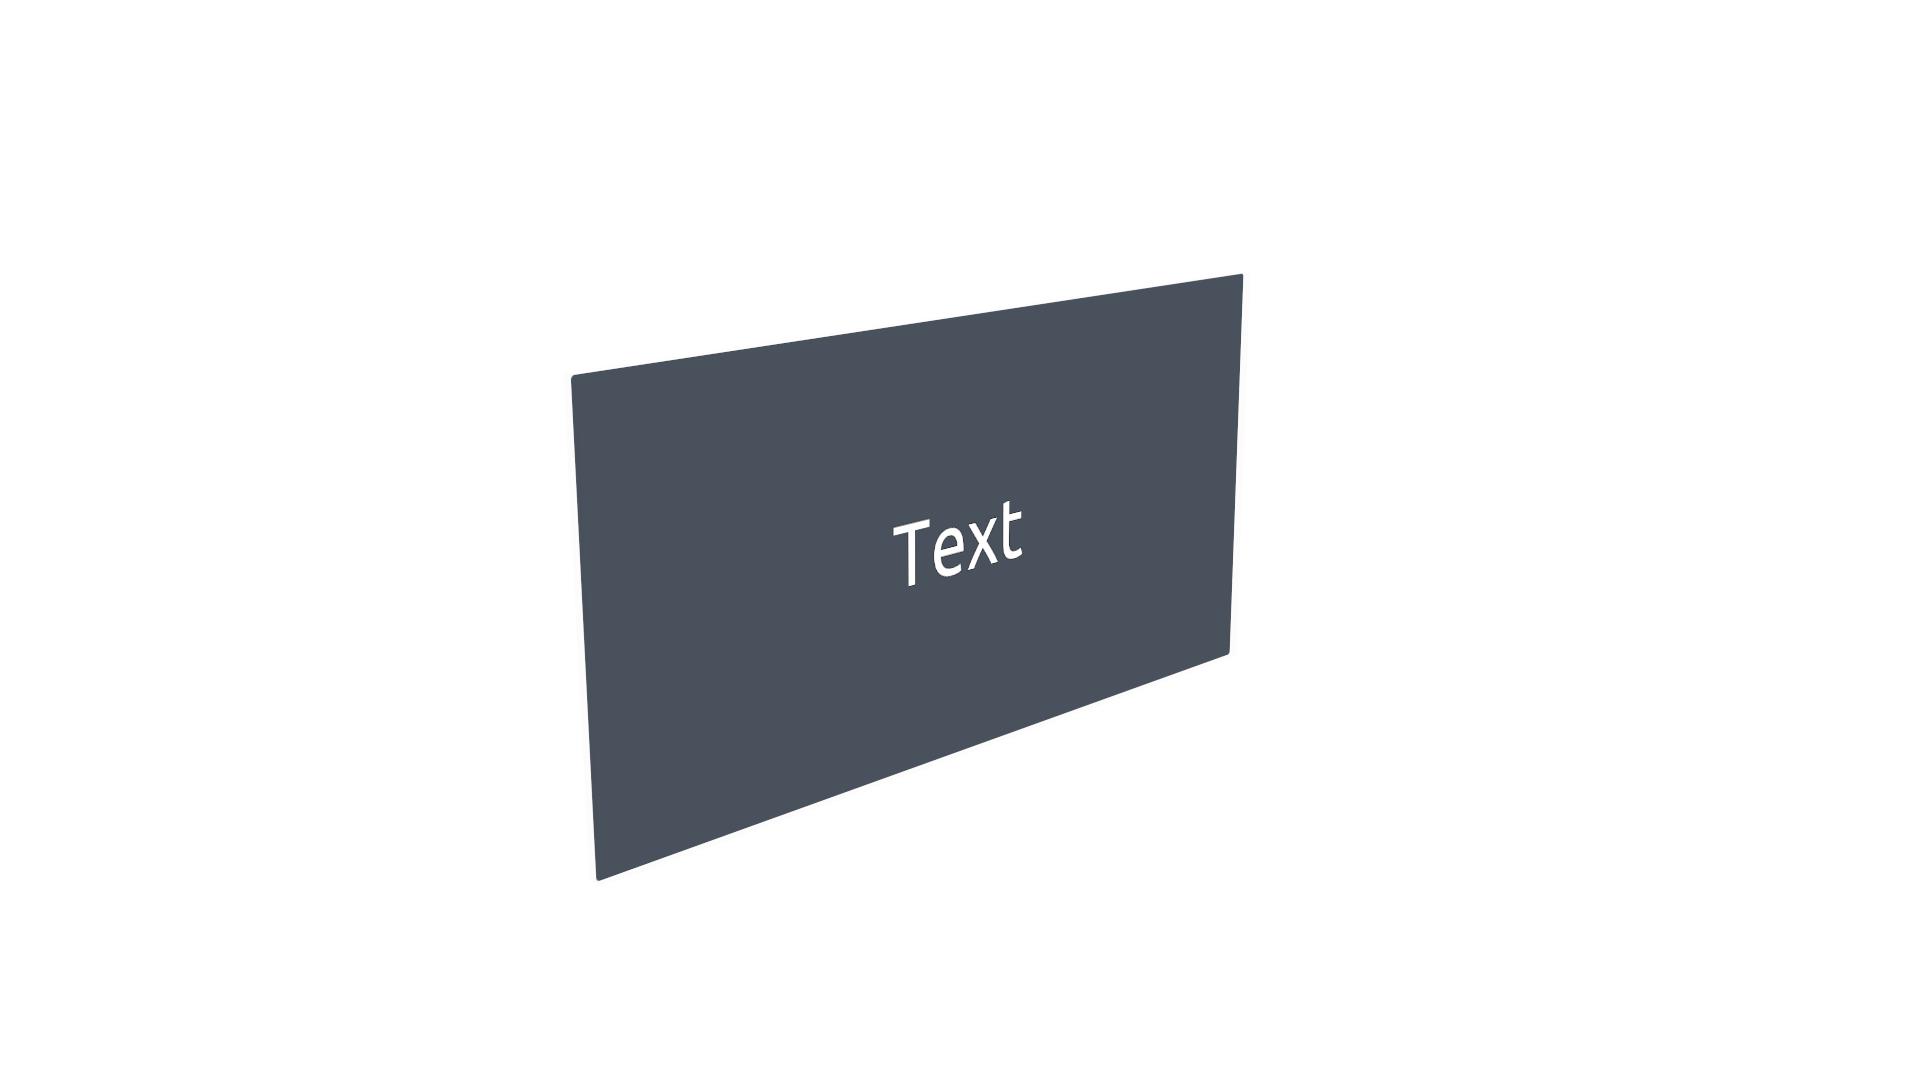 UI text panel